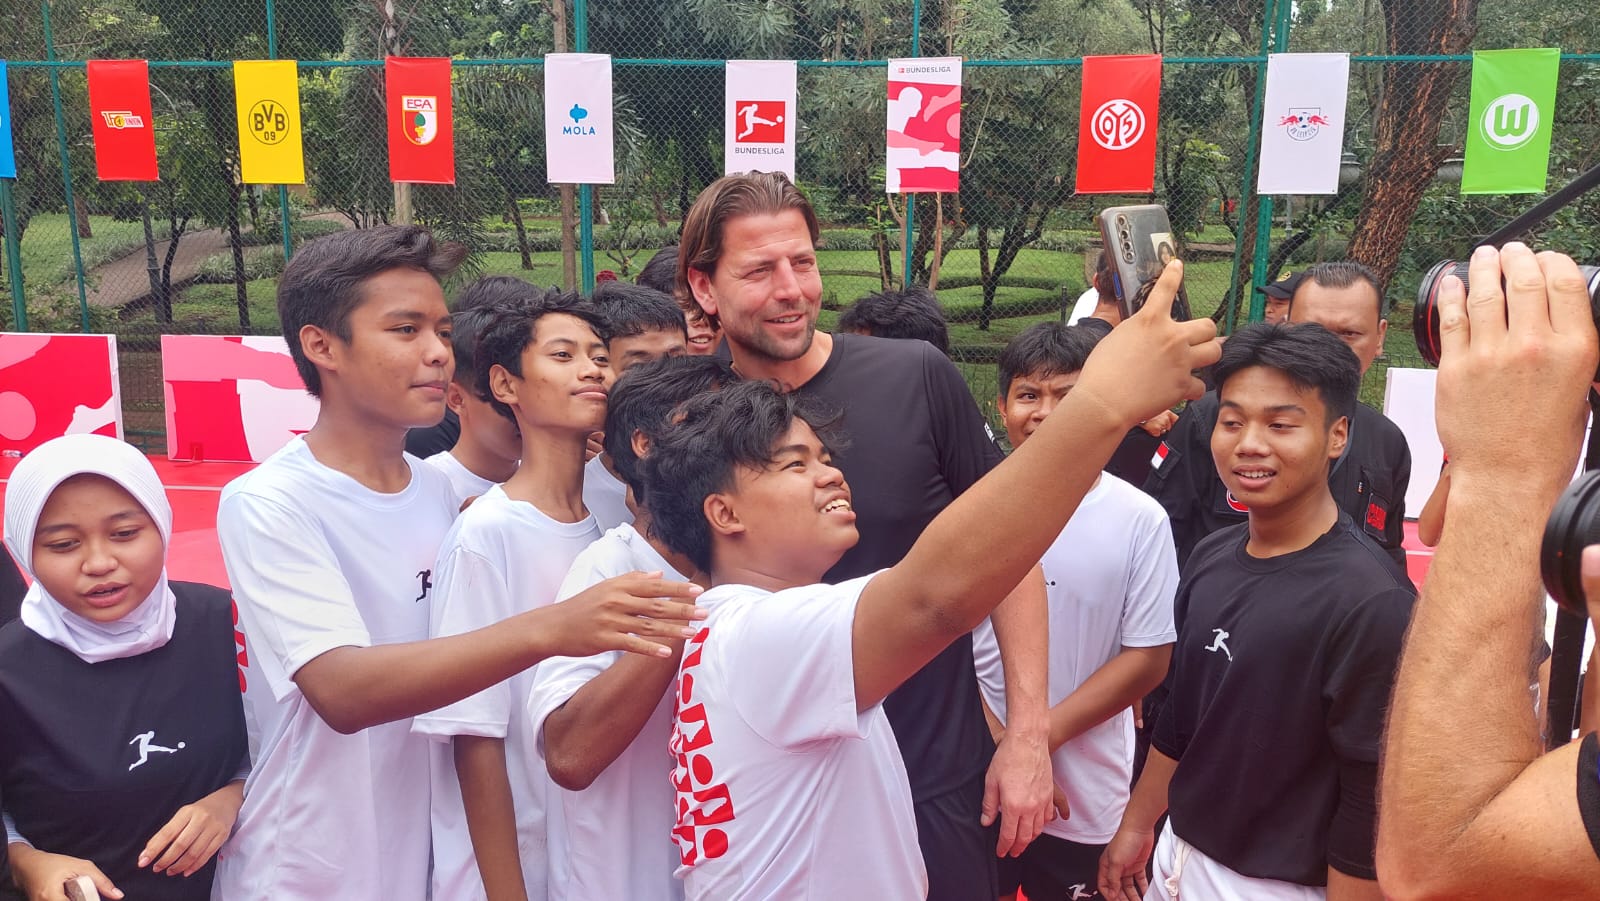 Hadir di Bundesliga Common Ground Jakarta, Roman Weidenfeller Puji Talenta Muda Indonesia